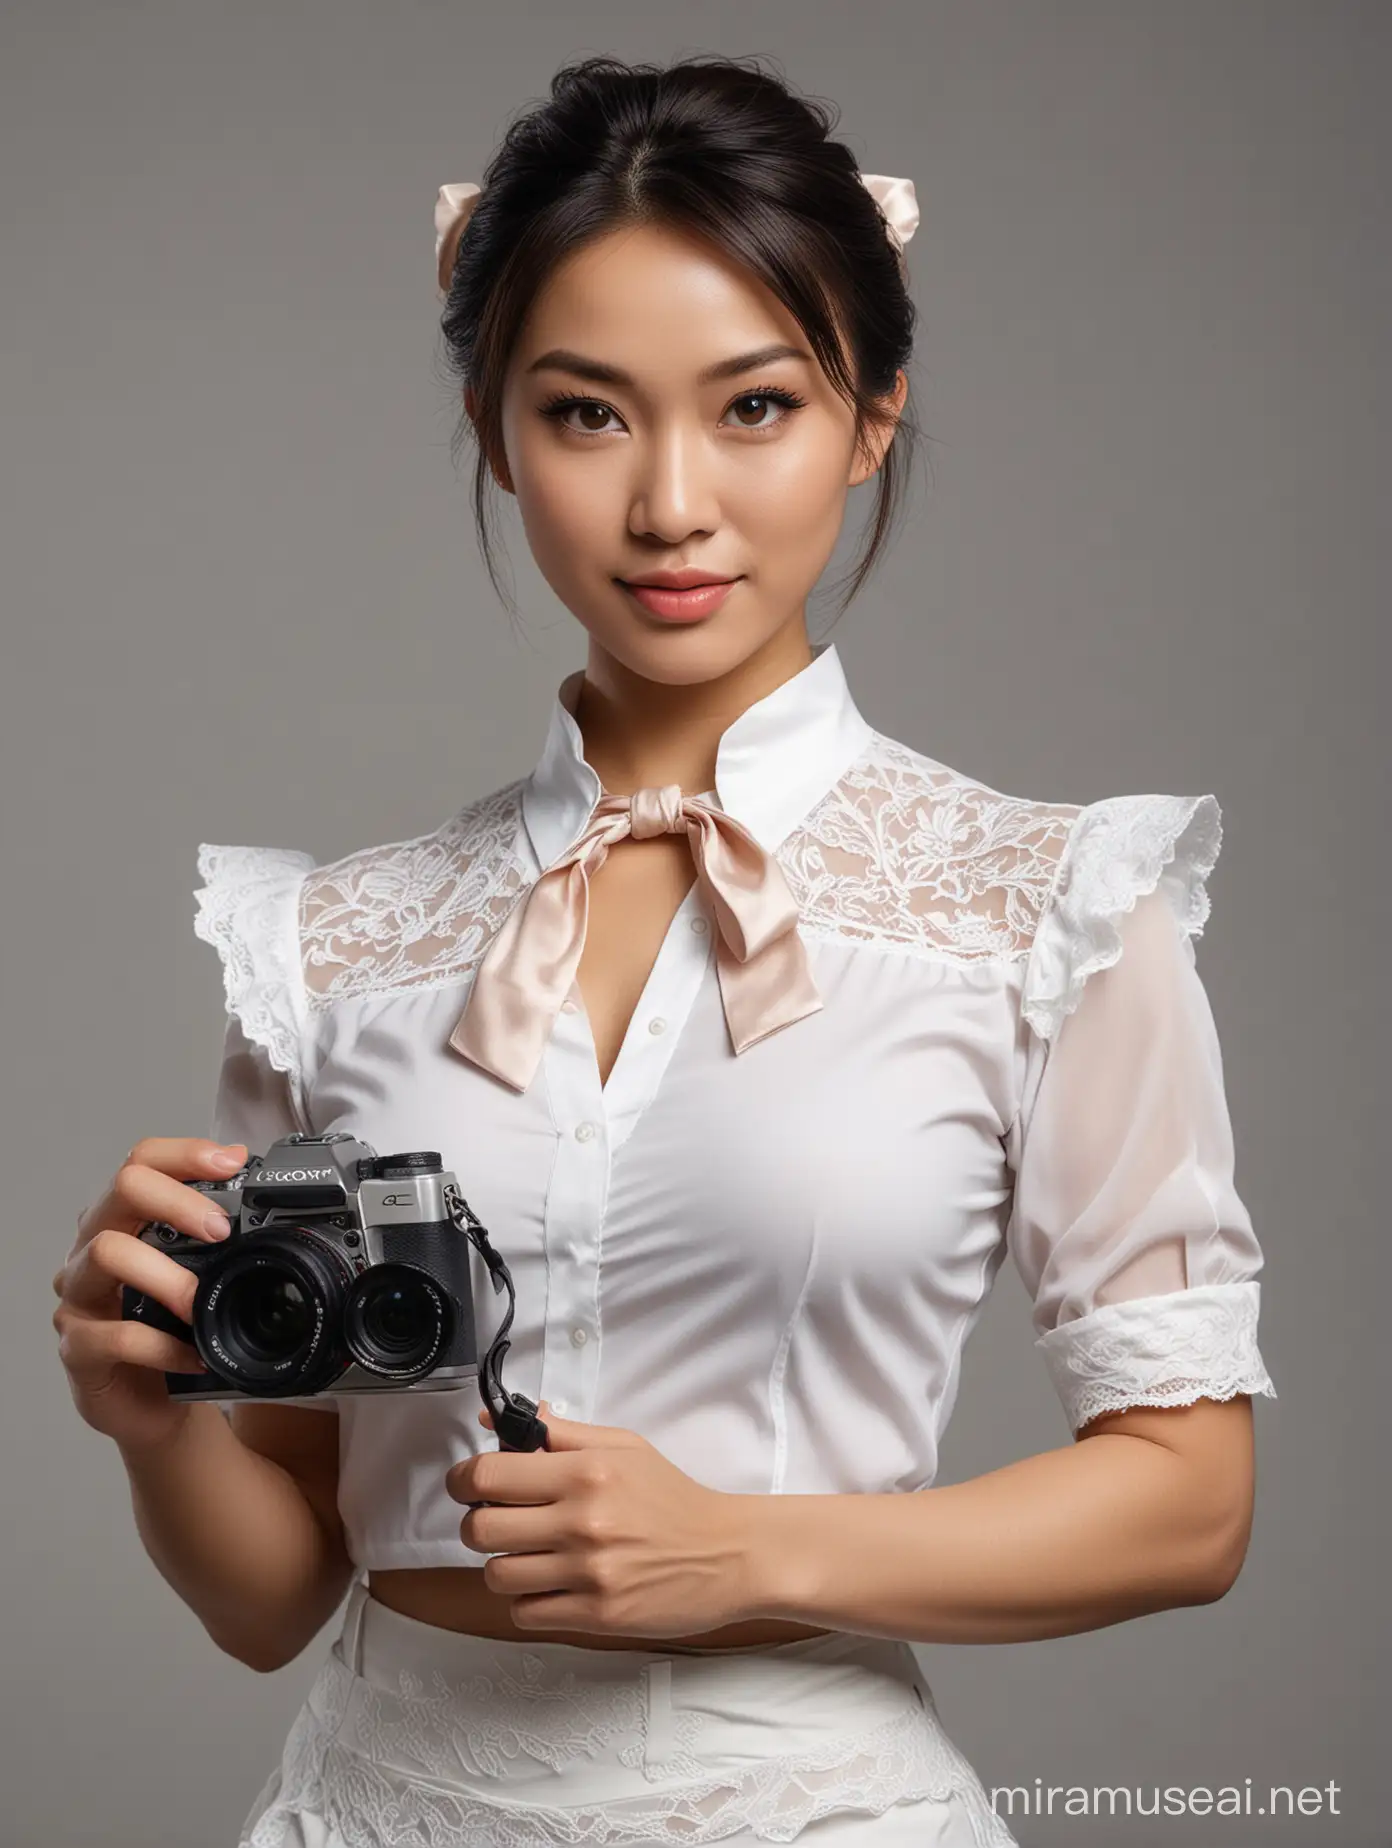 ChunLi Sensual Journalist Pose with Camera in Hand 8K Ultra Realistic Portrait